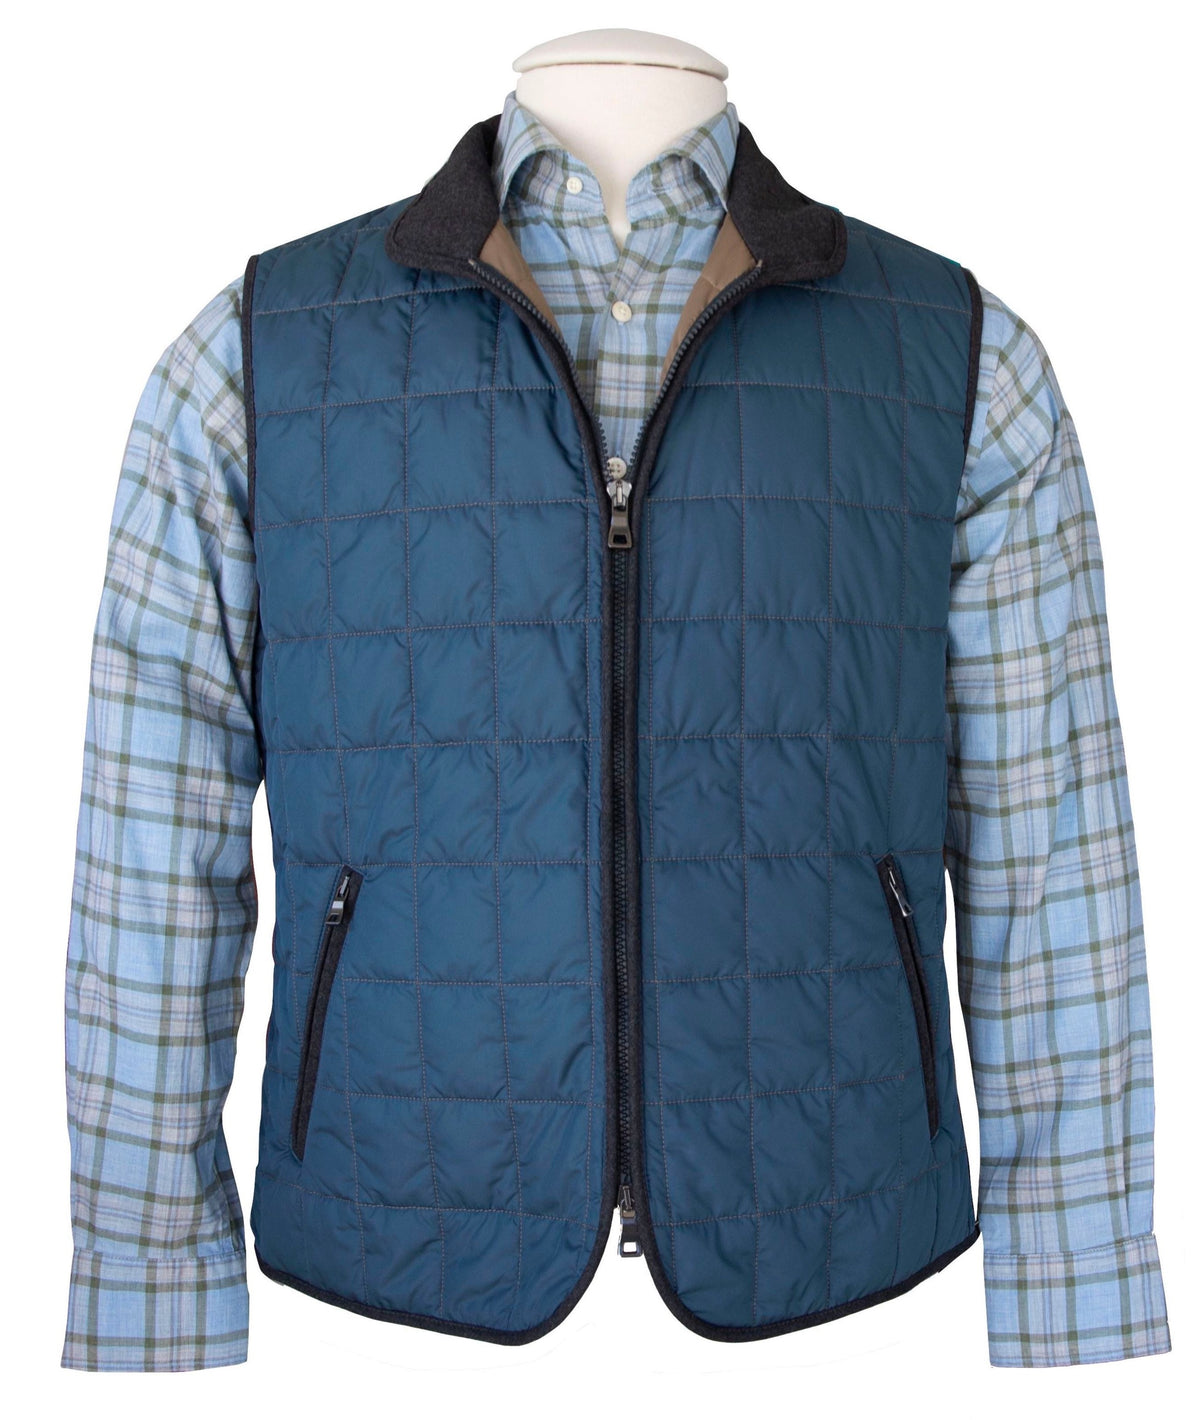 Peter Millar Essex Quilted Wool Travel Vest: Claret